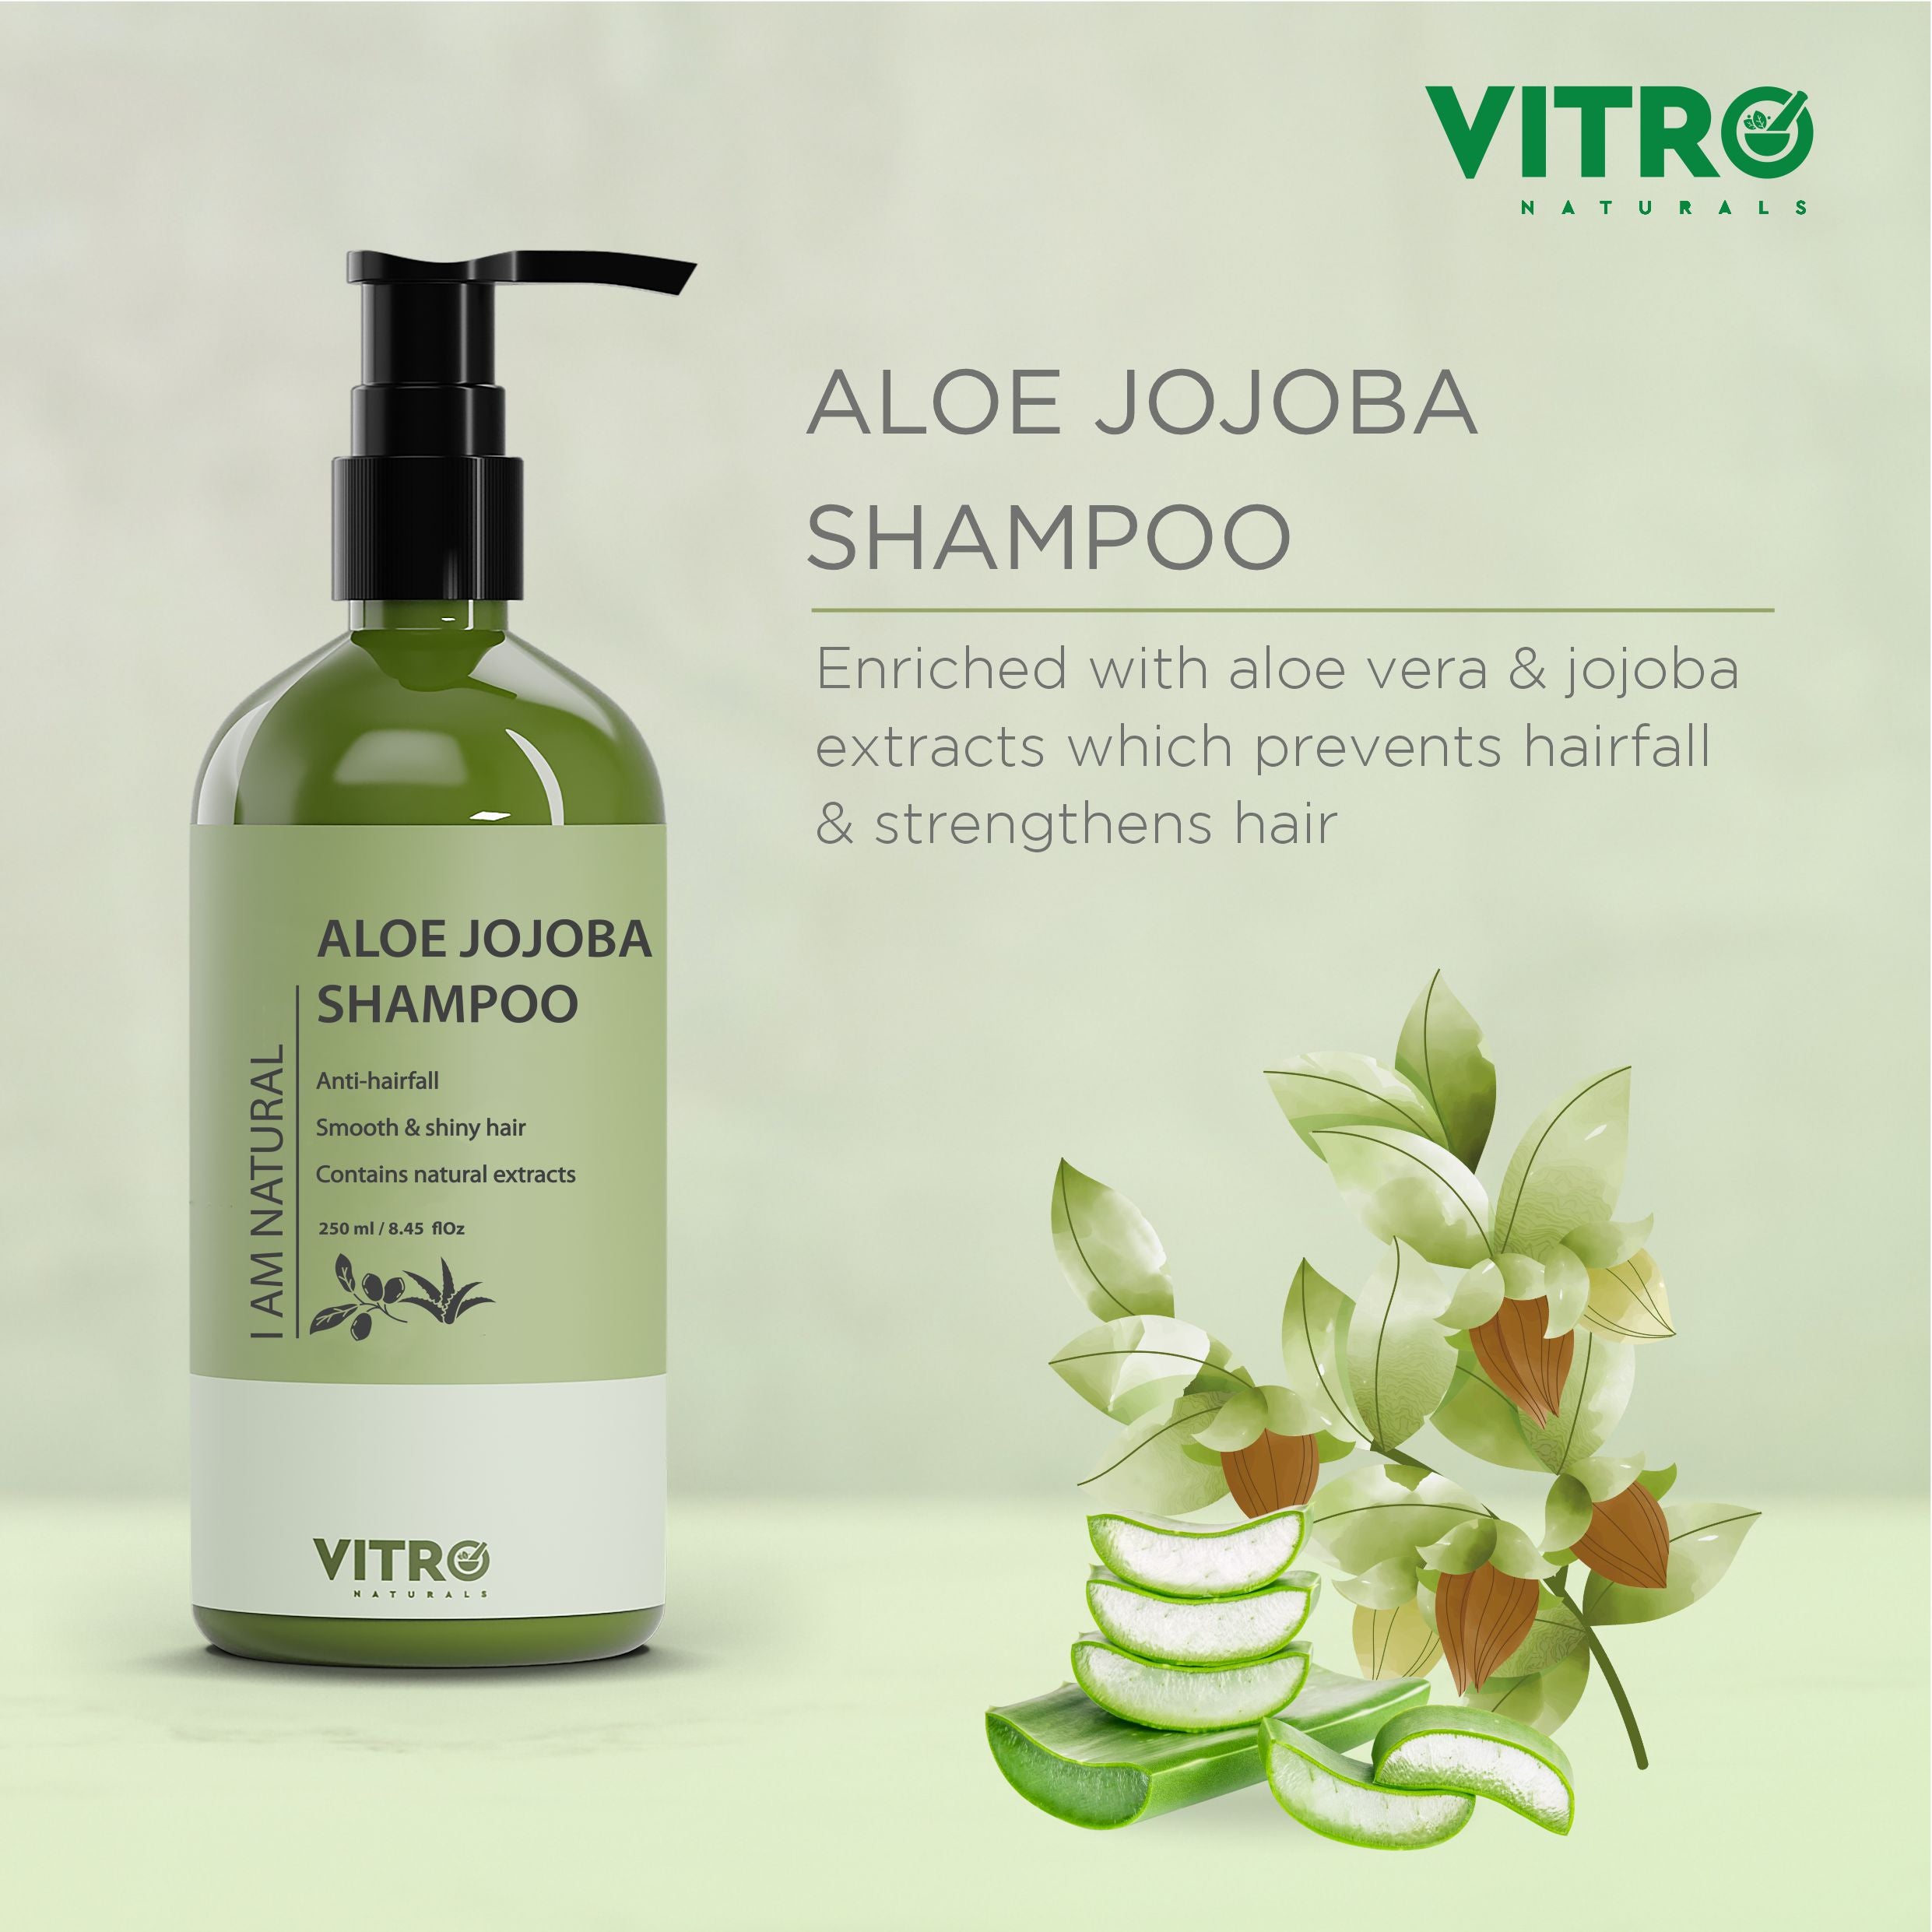 Aloe Jojoba shampoo